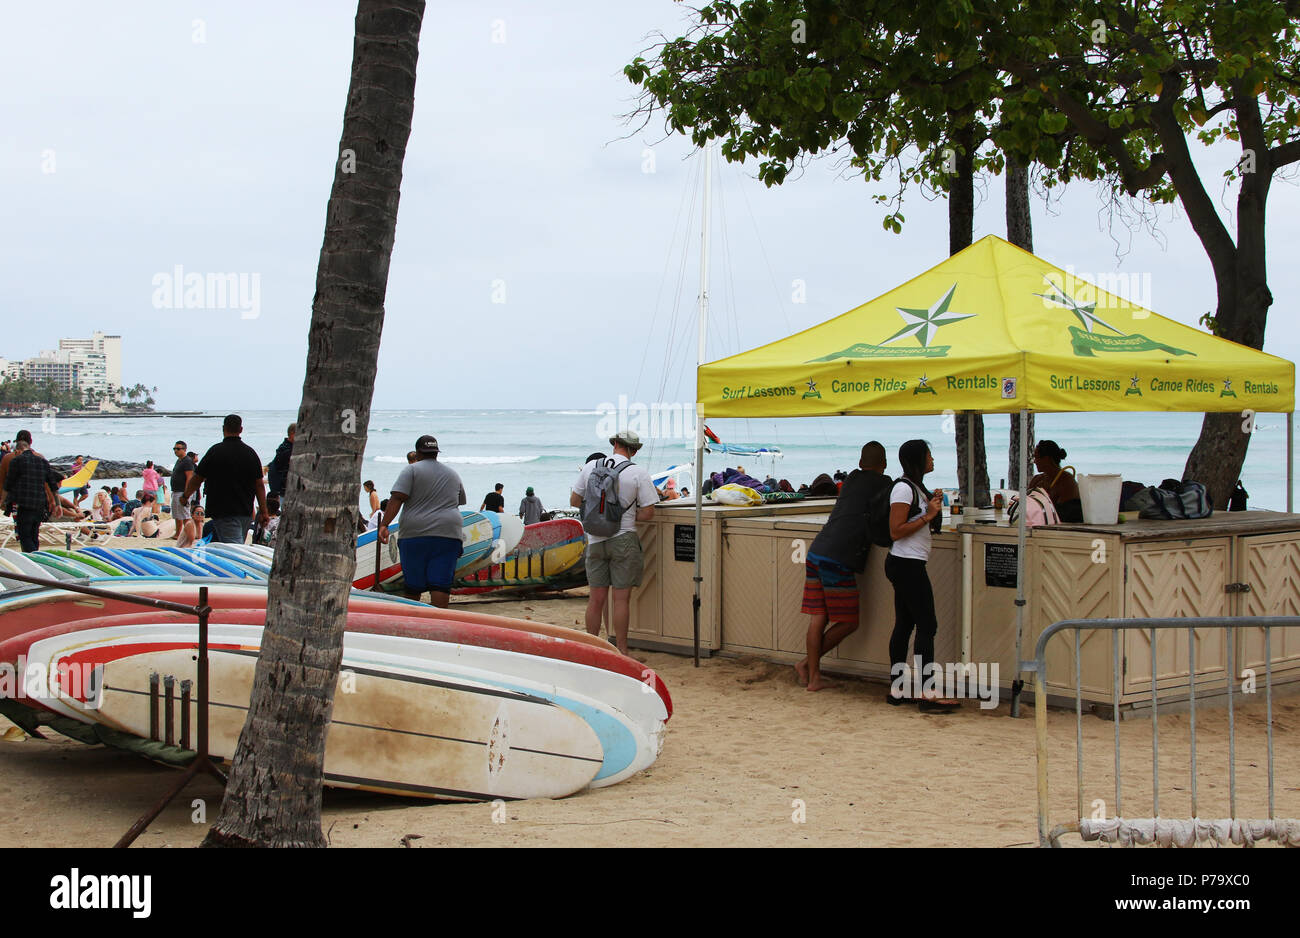 Star ragazzi della spiaggia tenda business offrendo lezioni di surf, canoa giostre e noleggi. La spiaggia di Waikiki, Waikiki, Honolulu Oahu Island, Hawaii, Stati Uniti d'America. Foto Stock